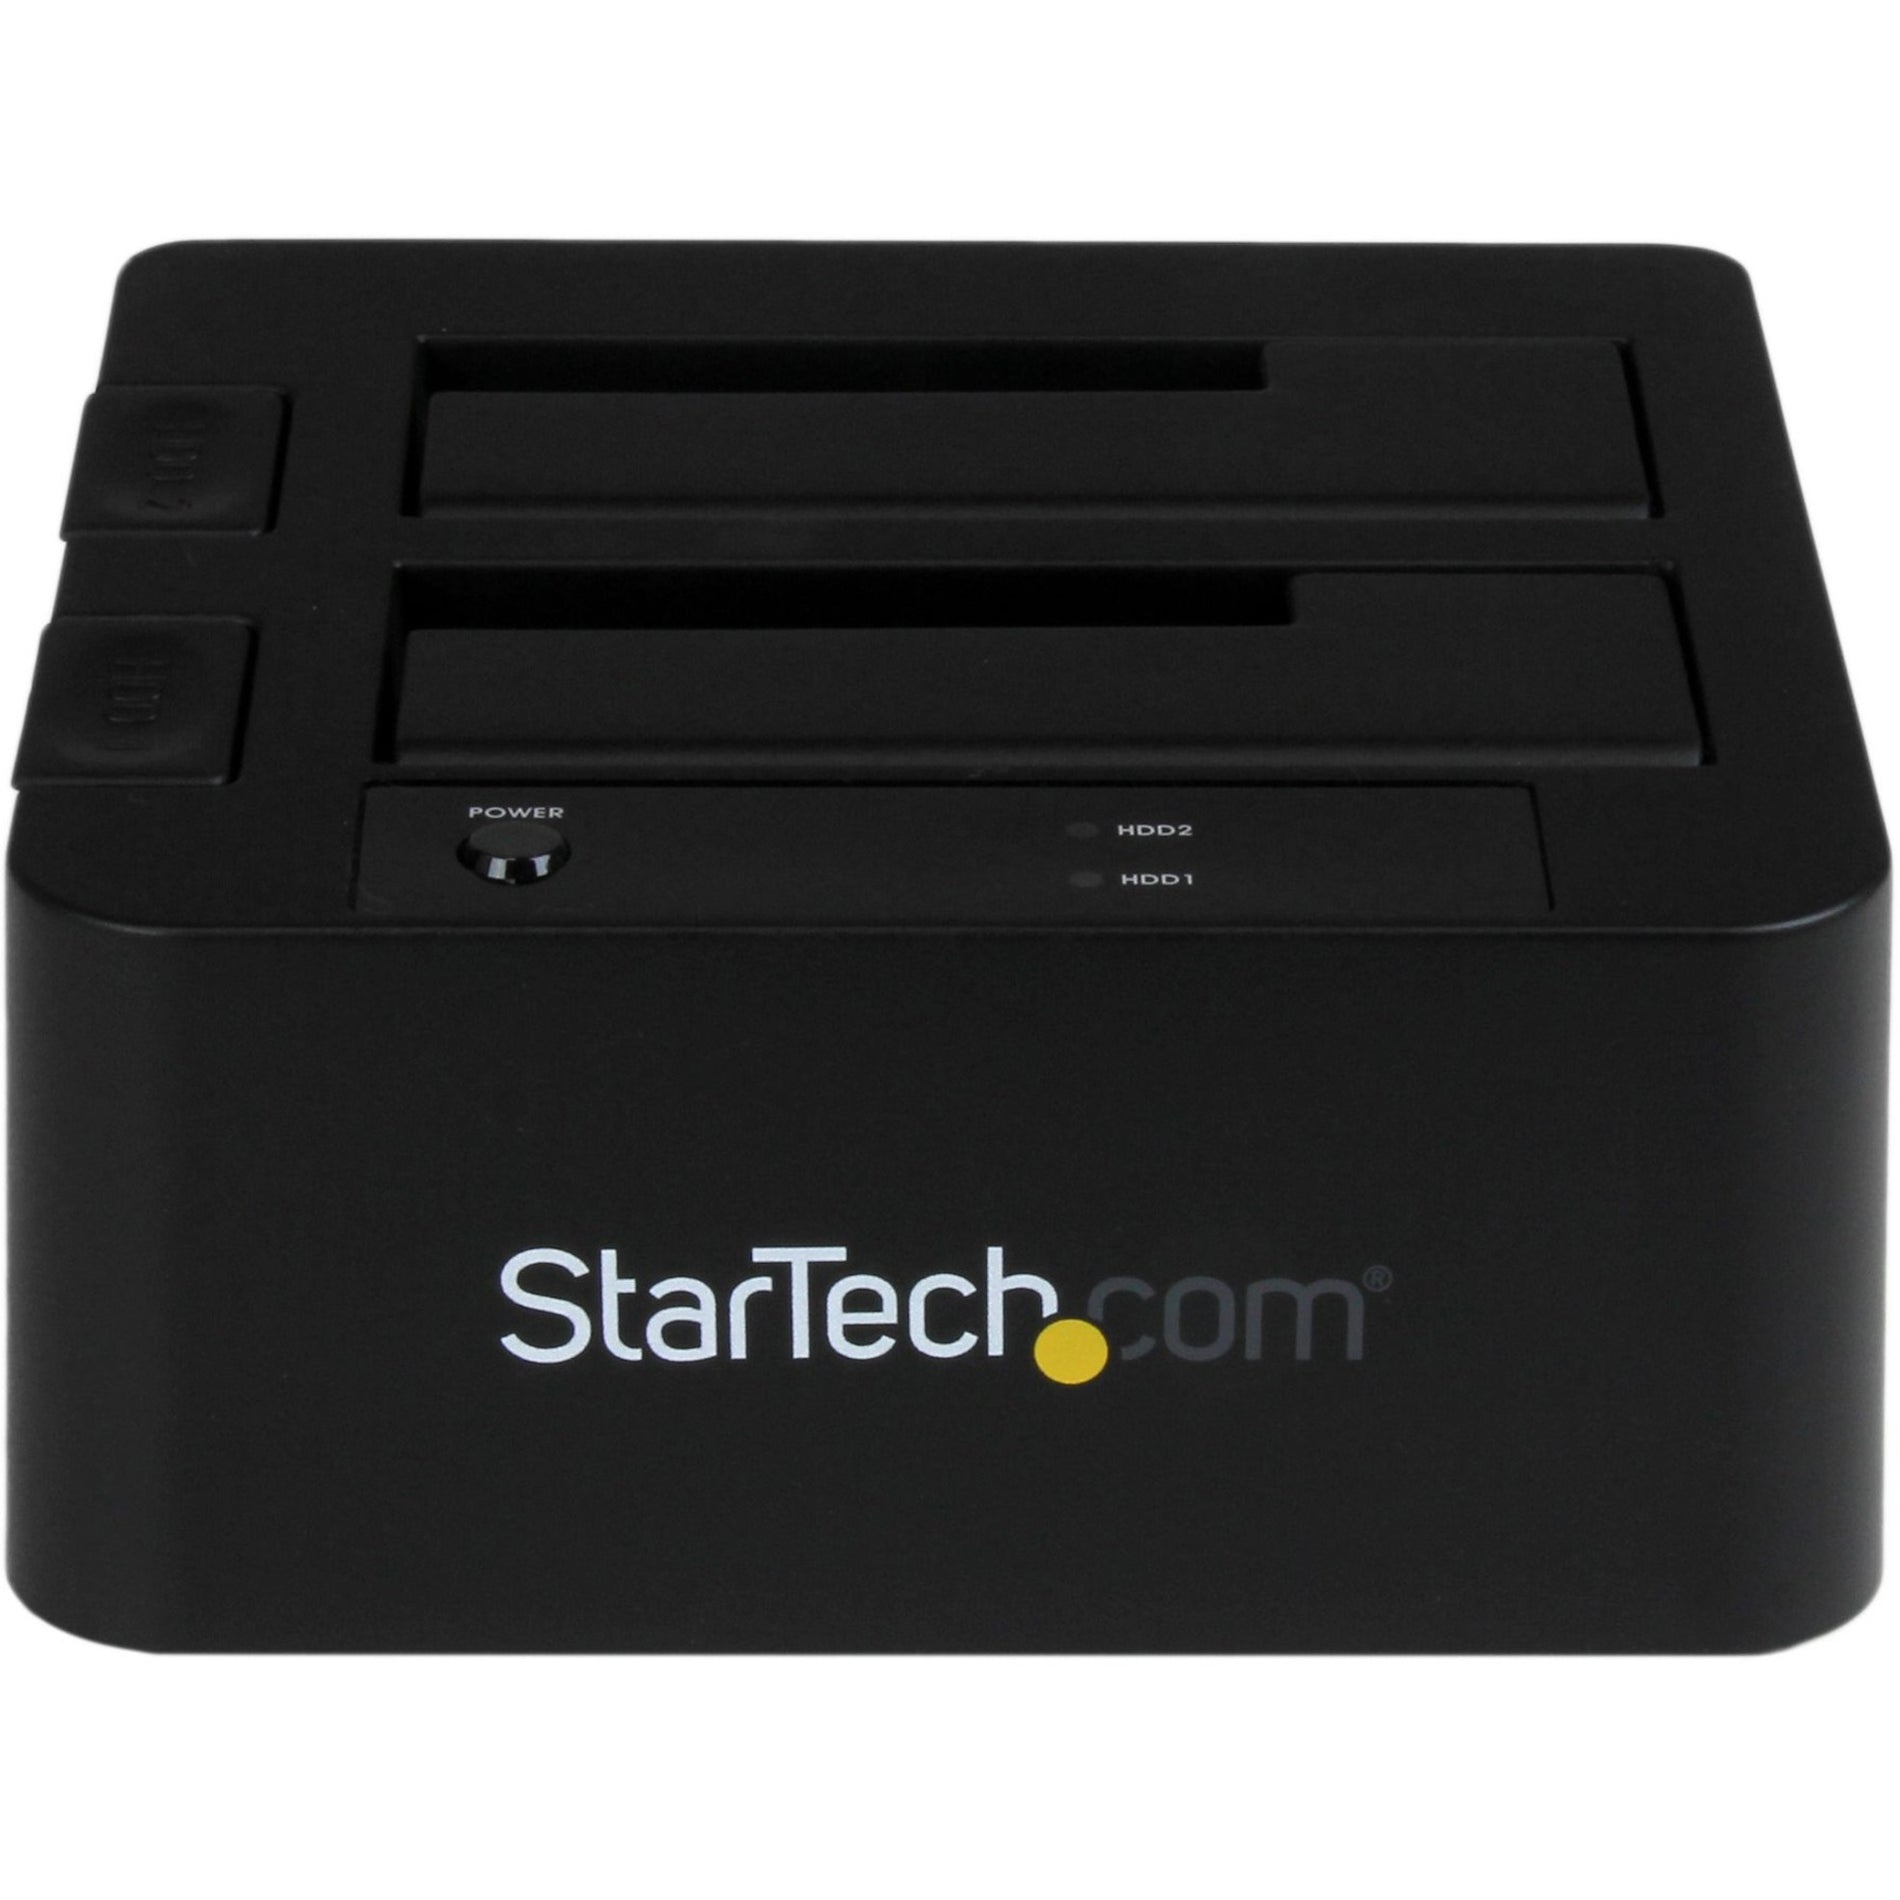 StarTech.com SDOCK2U33EB USB 3.0/ESATA Dual HDD/SSD Dock with UASP, Fast Data Transfer and Easy Hard Drive Access